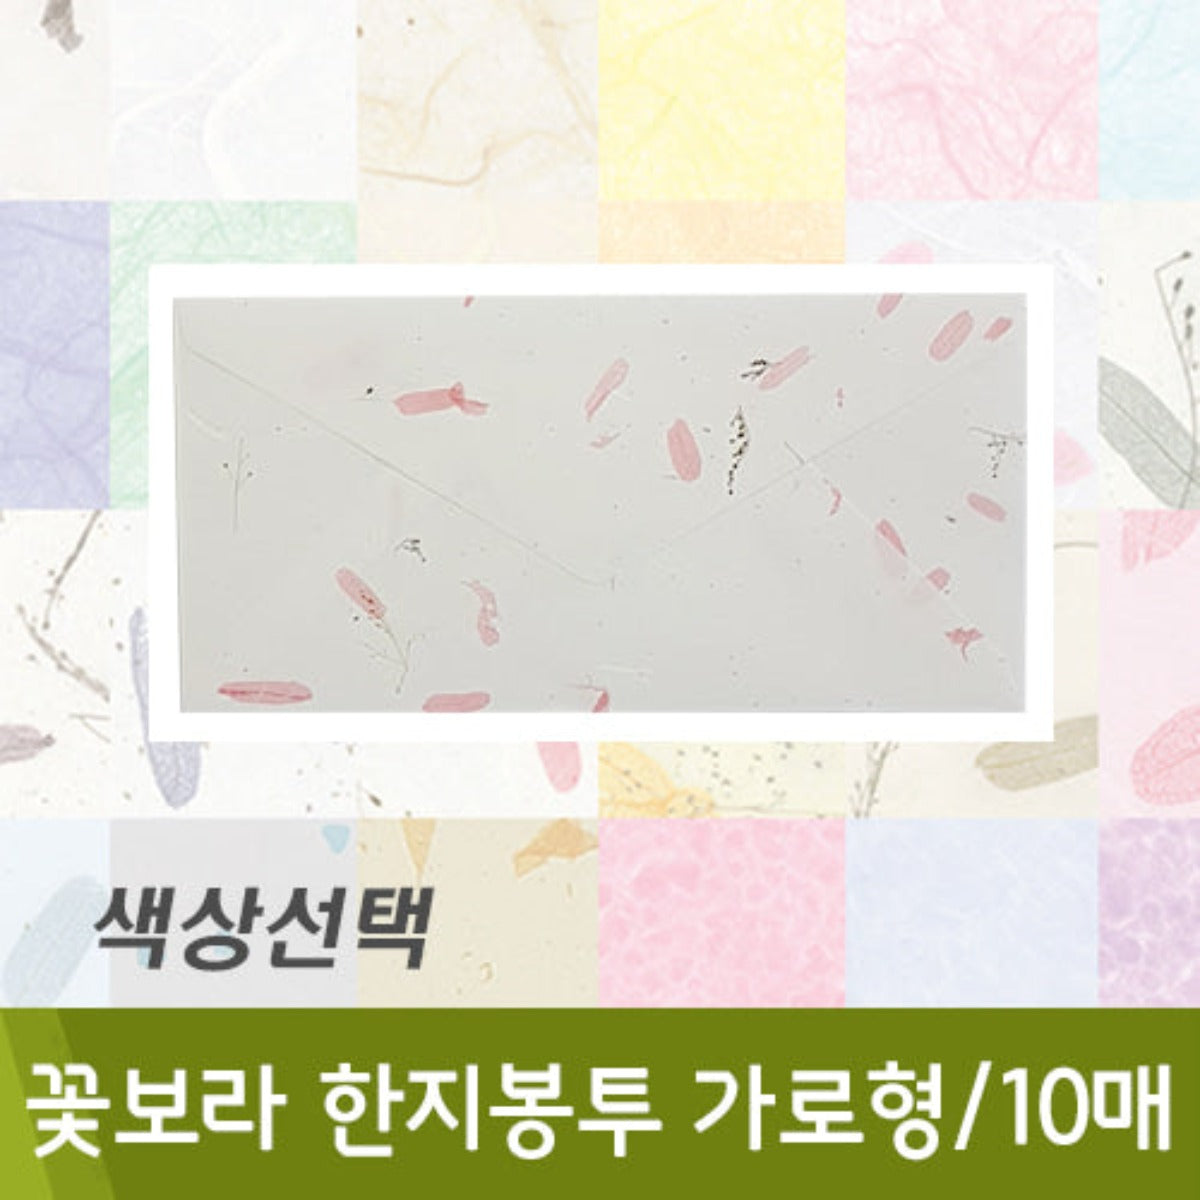 Korean Handicraft Envelope